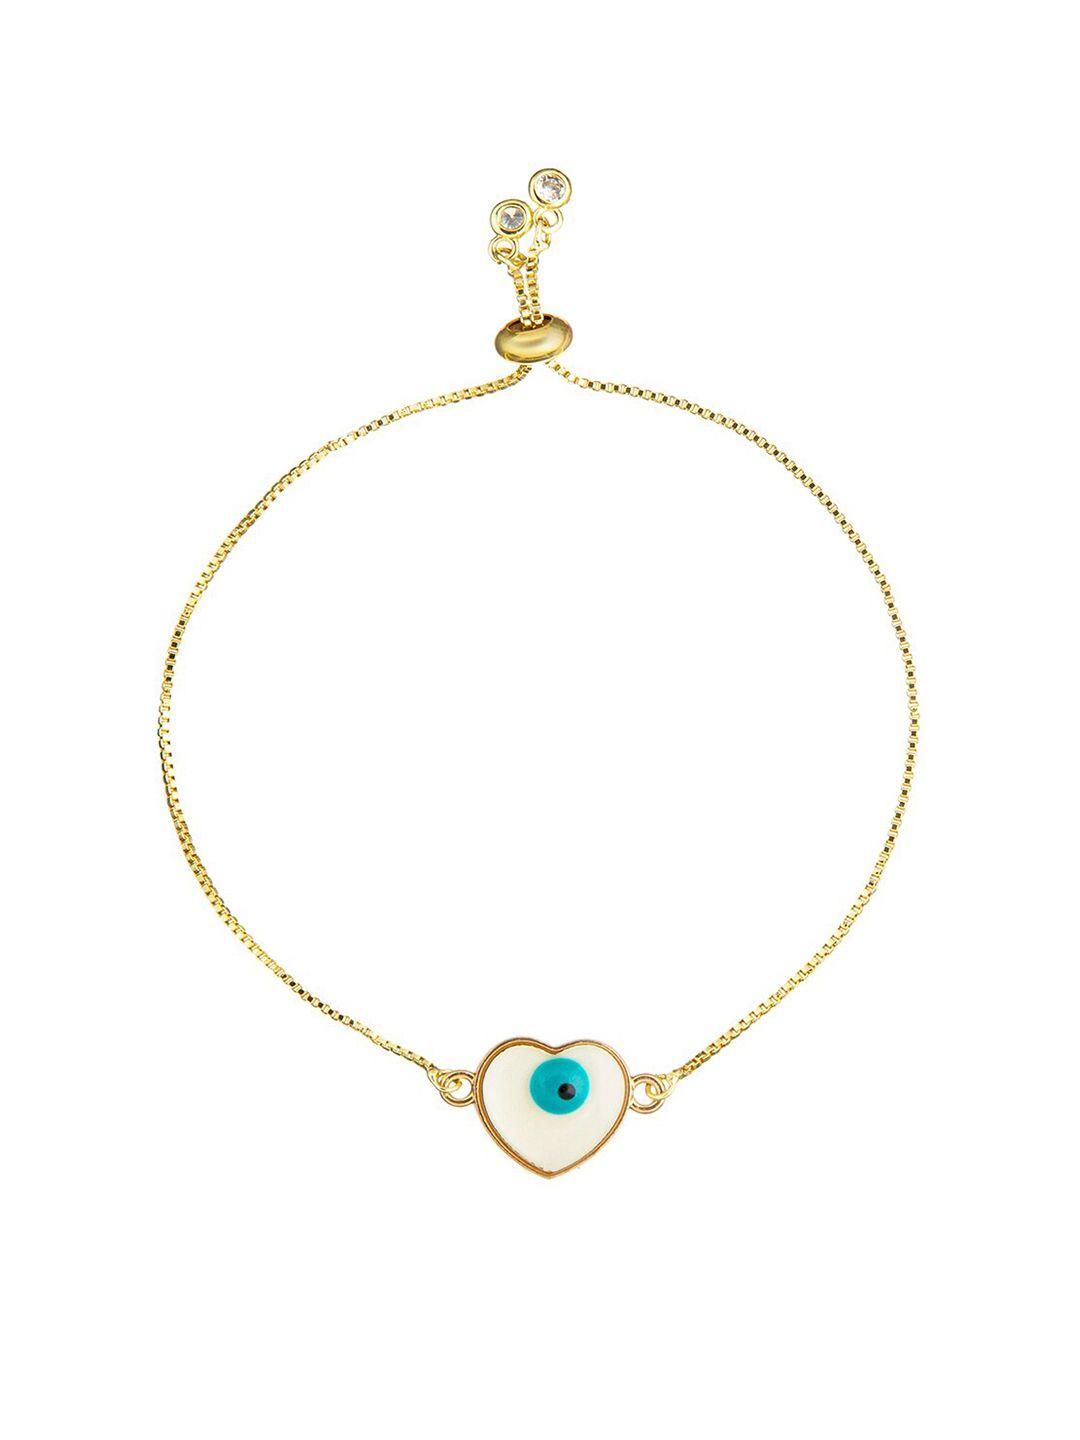 shining jewel - by shivansh women brass cubic zirconia gold-plated link bracelet